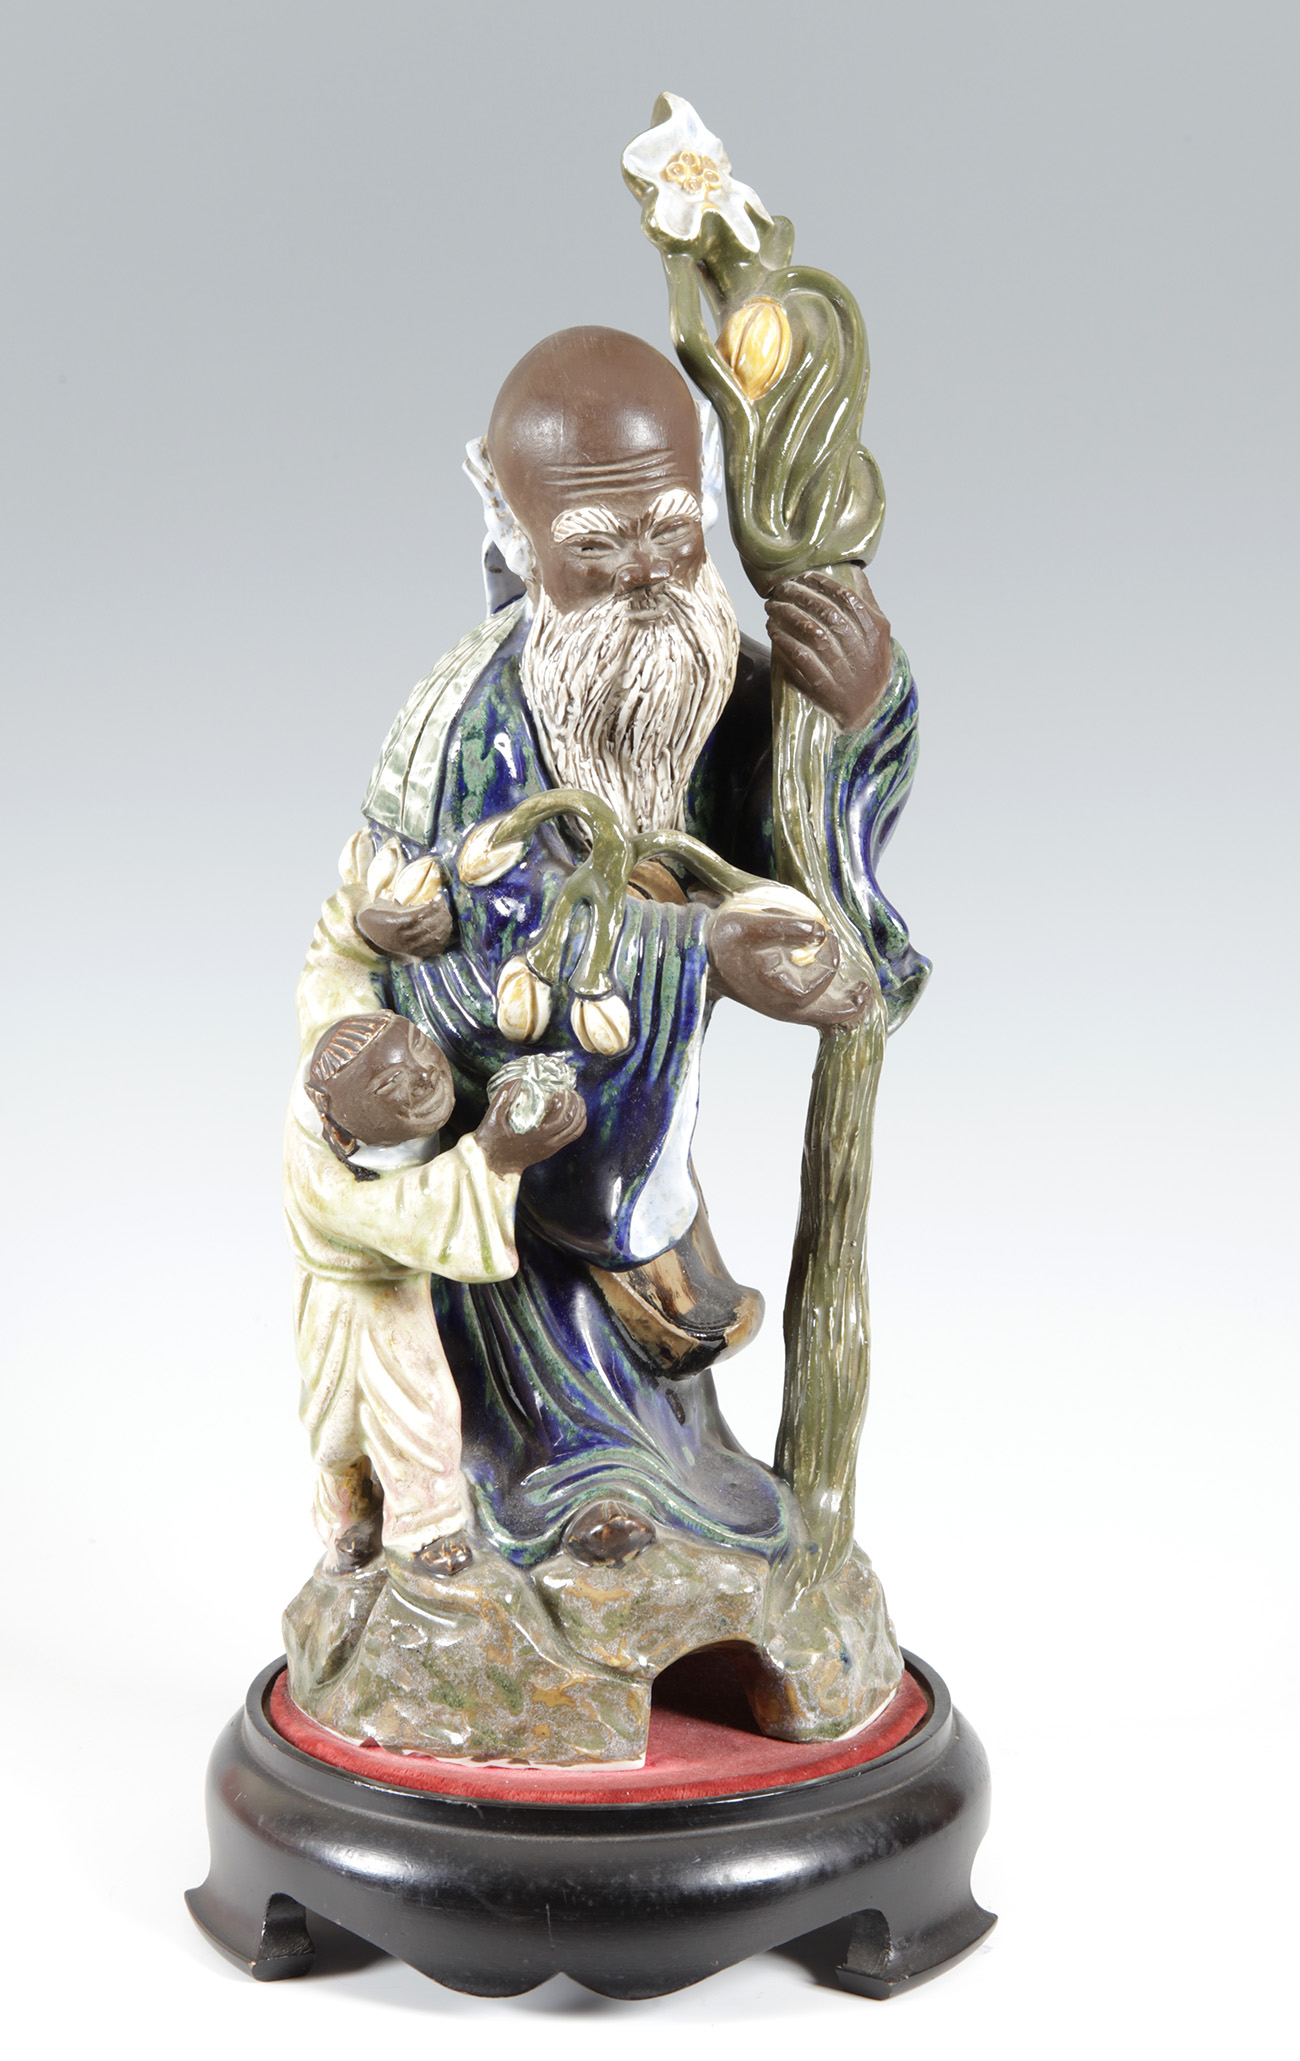 Shou figure; China, early 20th century.Enamelled porcelain.Measurements: 46 x 18 x 15 cm (figure); 6